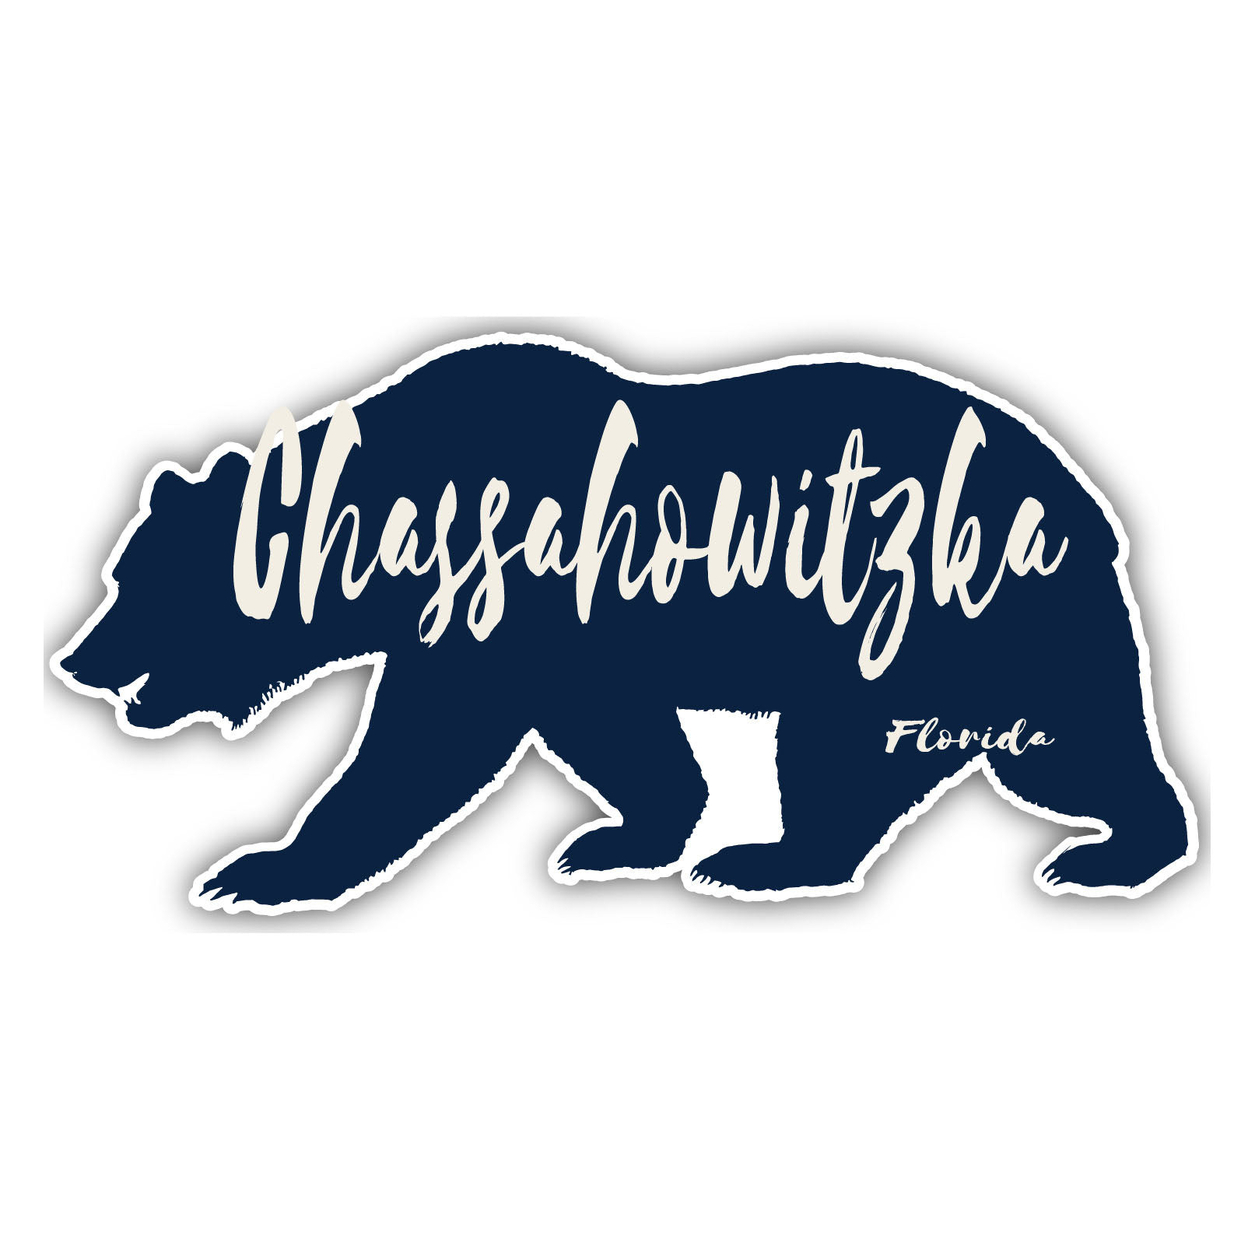 Chassahowitzka Florida Souvenir Decorative Stickers (Choose Theme And Size) - Single Unit, 6-Inch, Bear